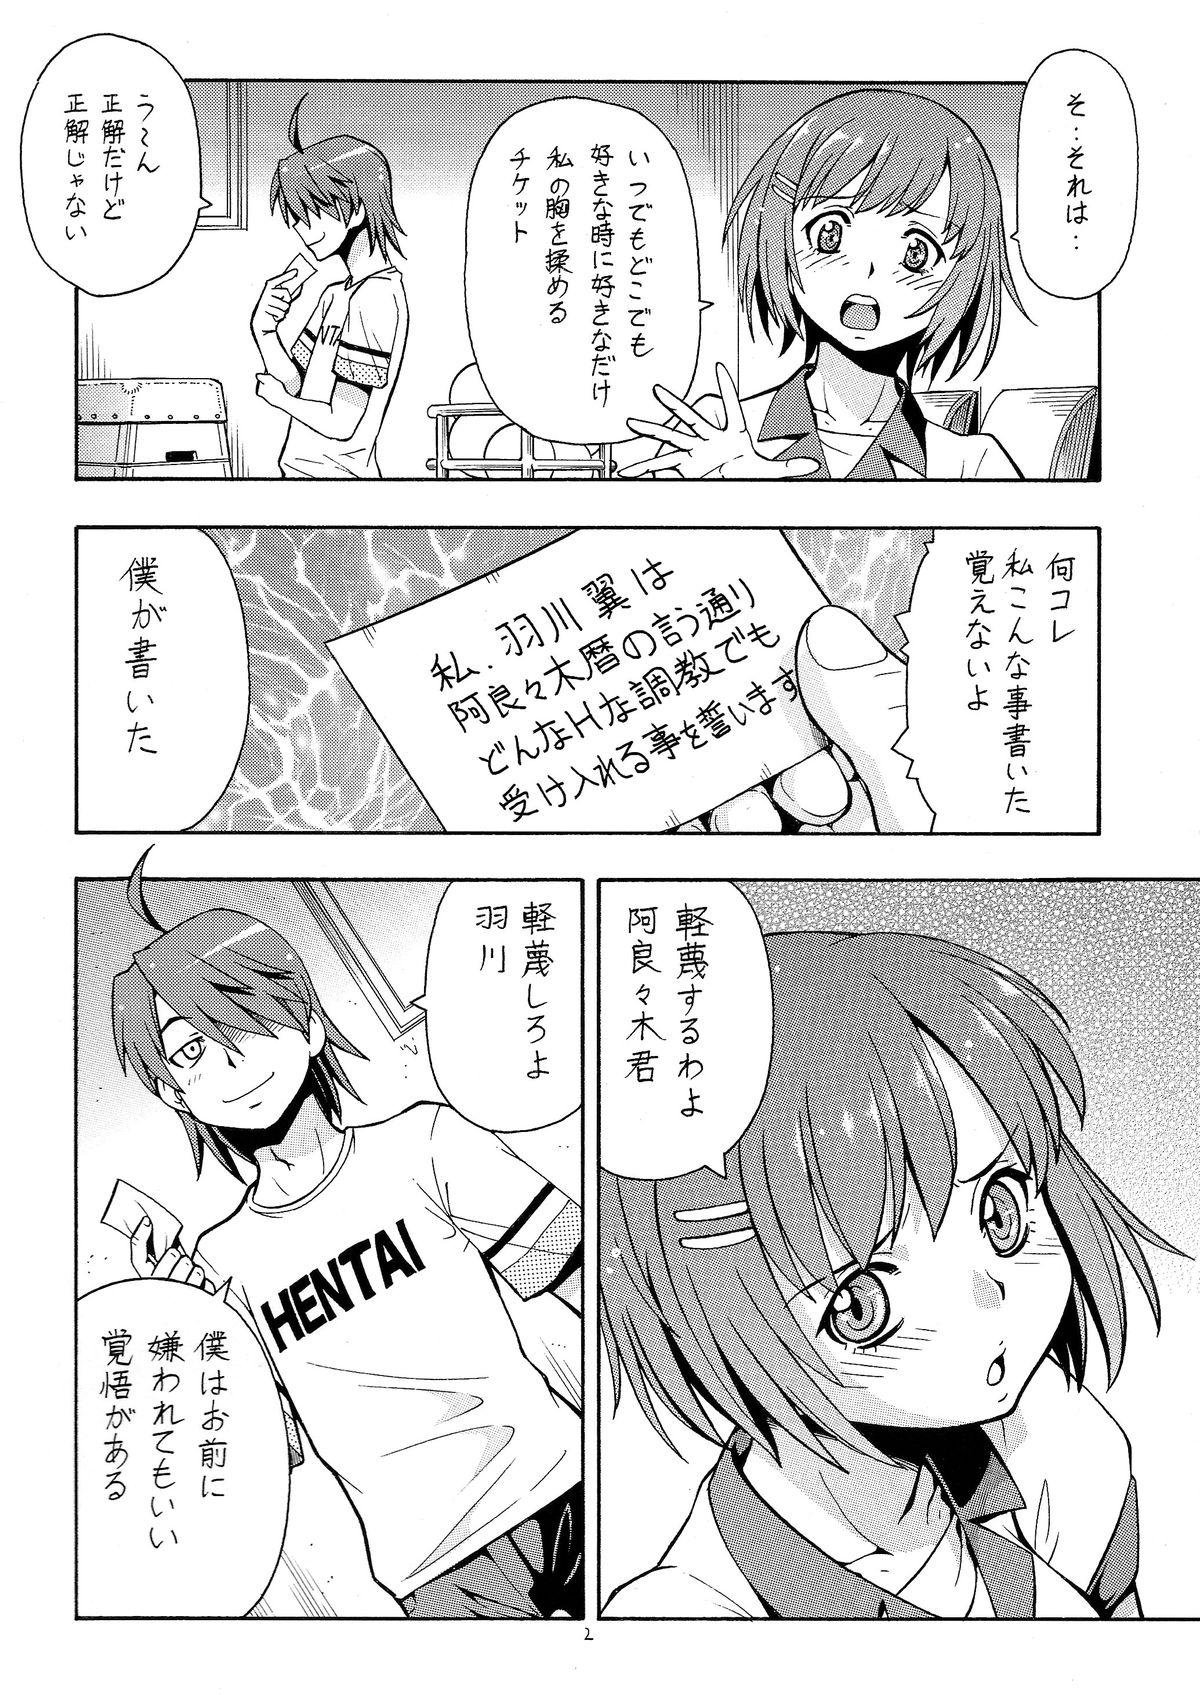 Fuck Com Hito ni Hakanai to Kaite "Araragi" to Yomu 7 - Bakemonogatari Gaygroup - Page 4